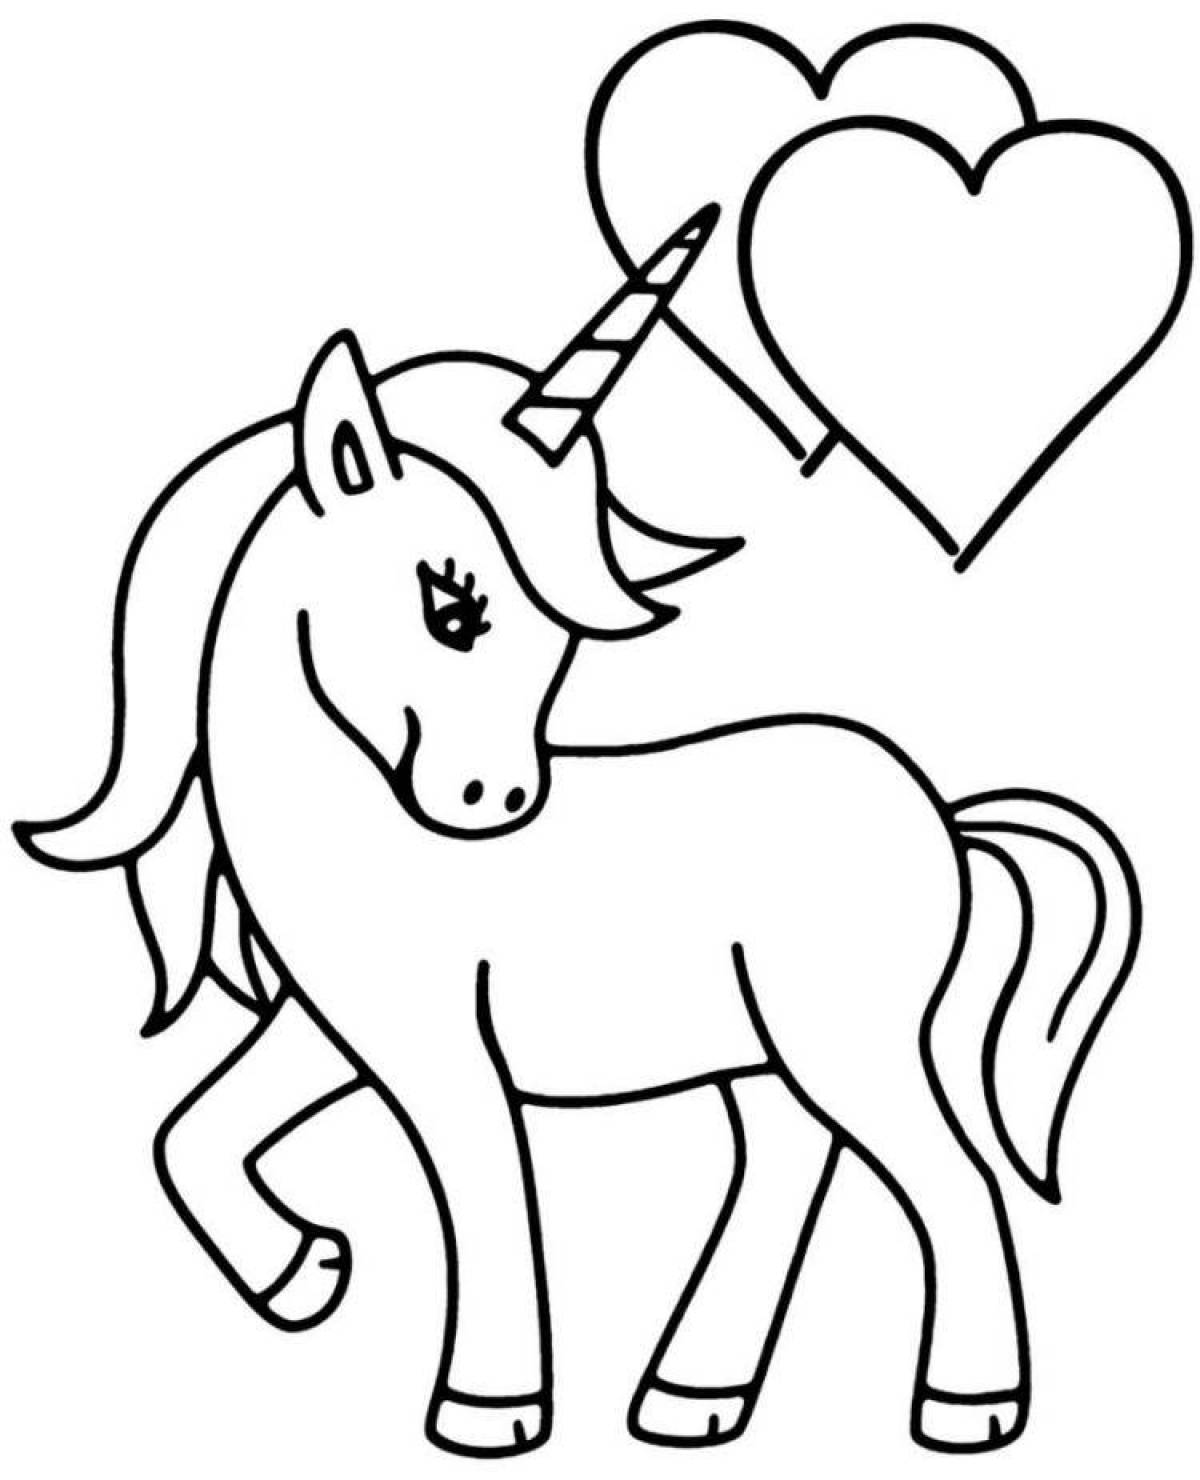 Joyful coloring drawing of a unicorn